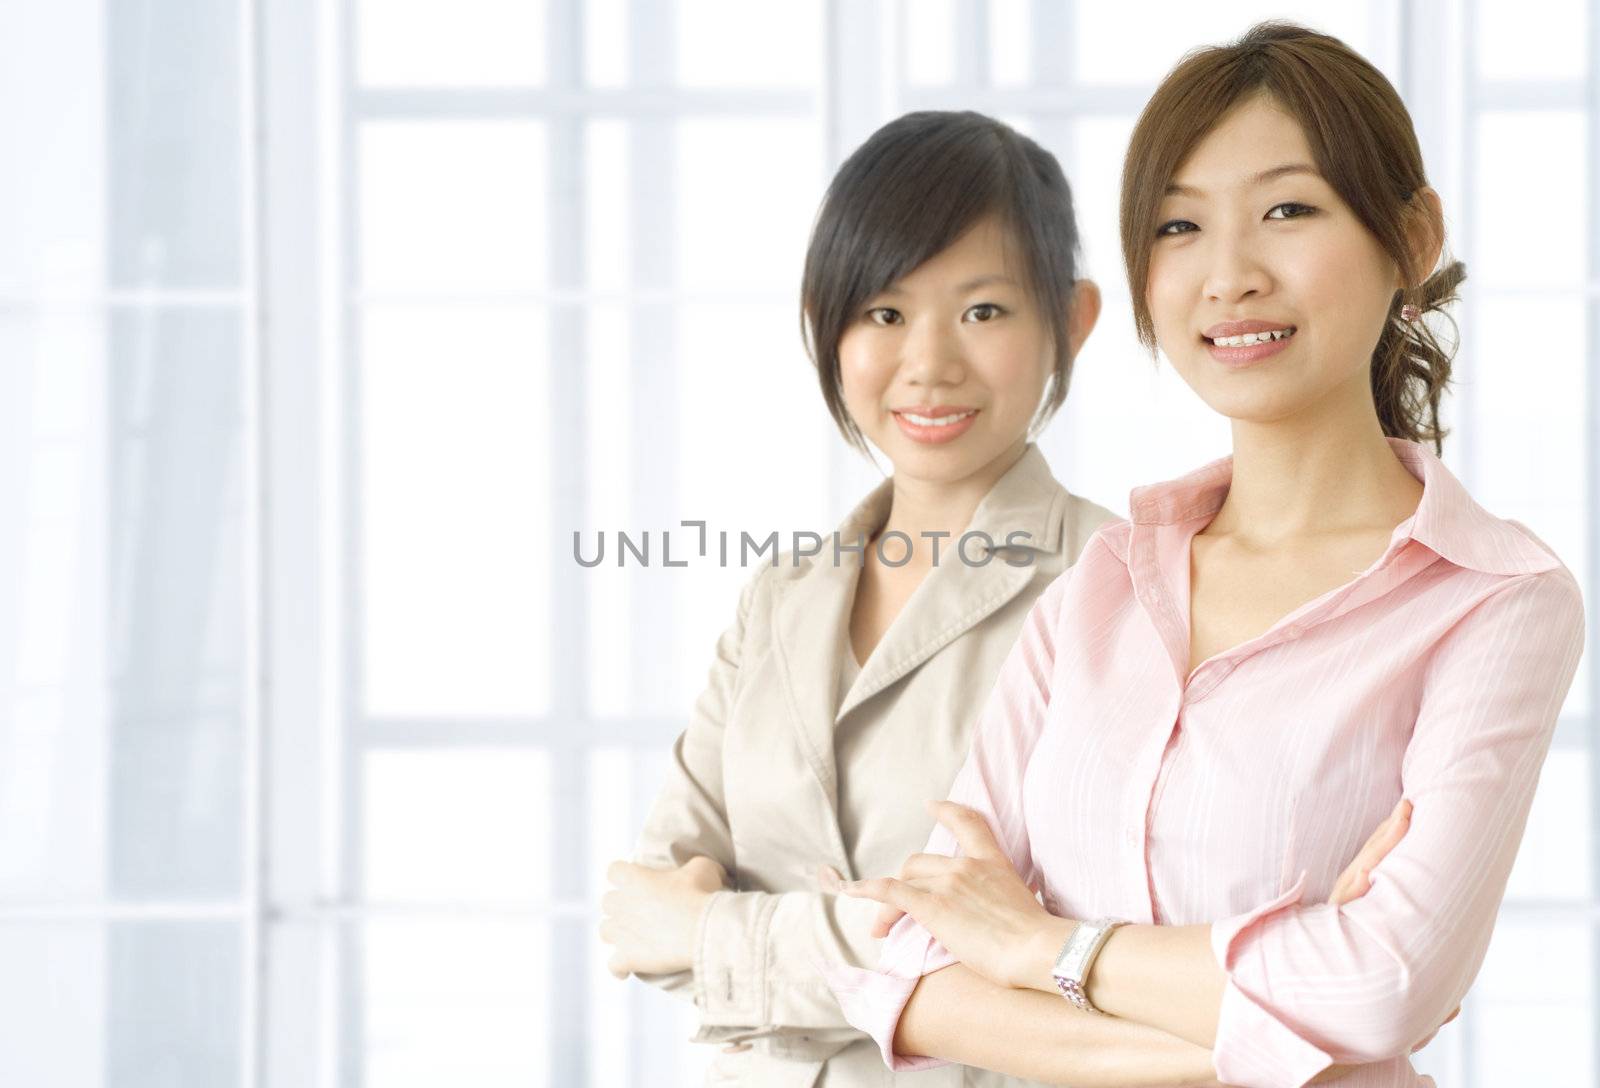 Asian business women in office environment